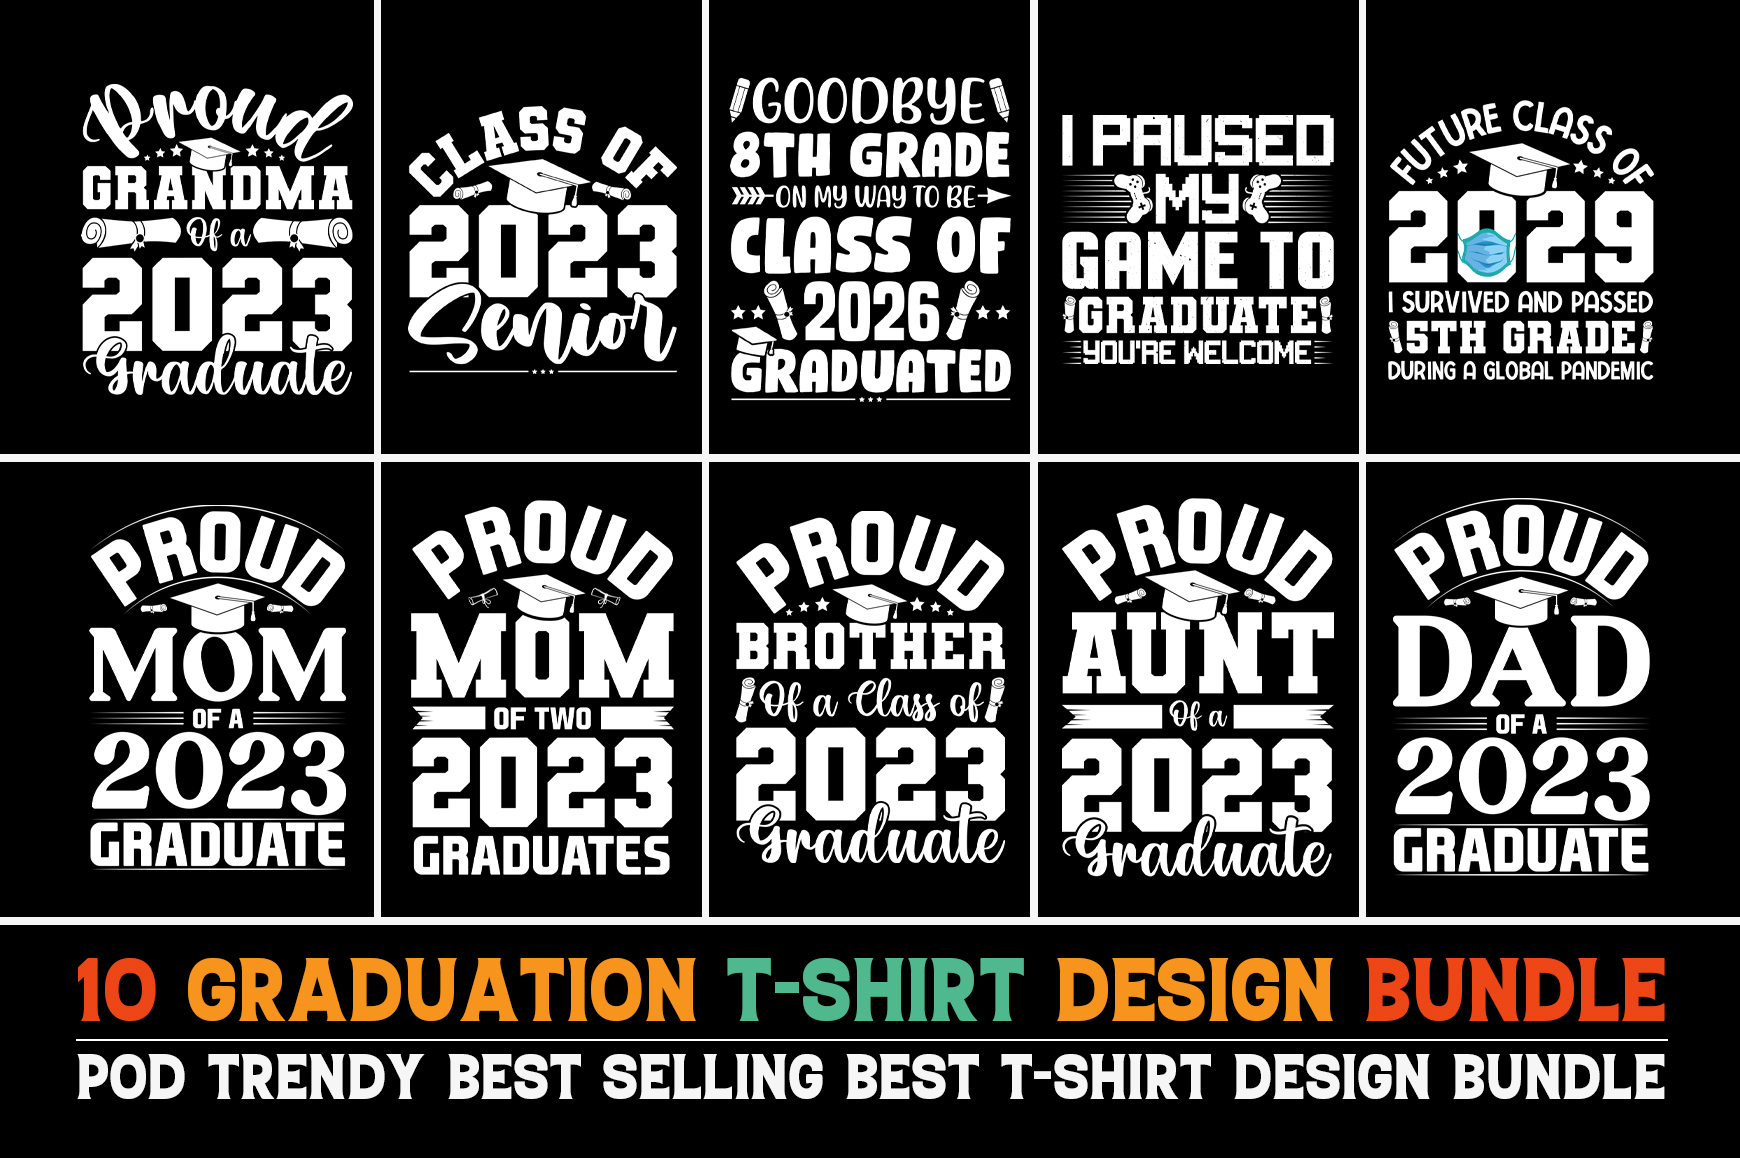 Graduation T-Shirt Design Bundle Buy t-shirt designs